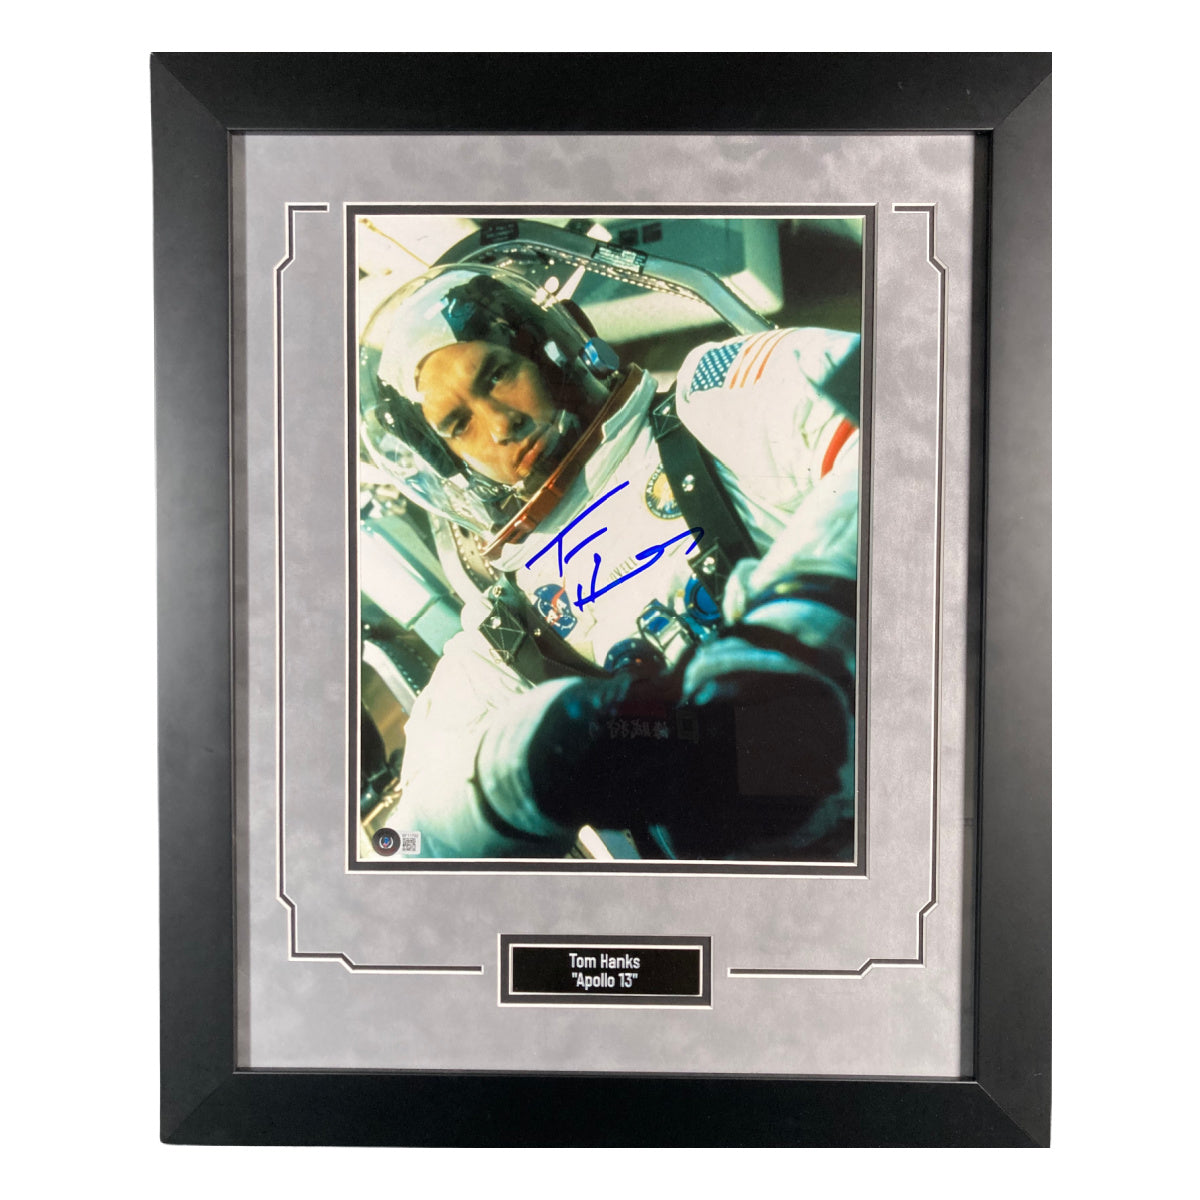 Tom Hanks Signed 11x14 Photo Apollo 13 Custom Framed Autographed BAS